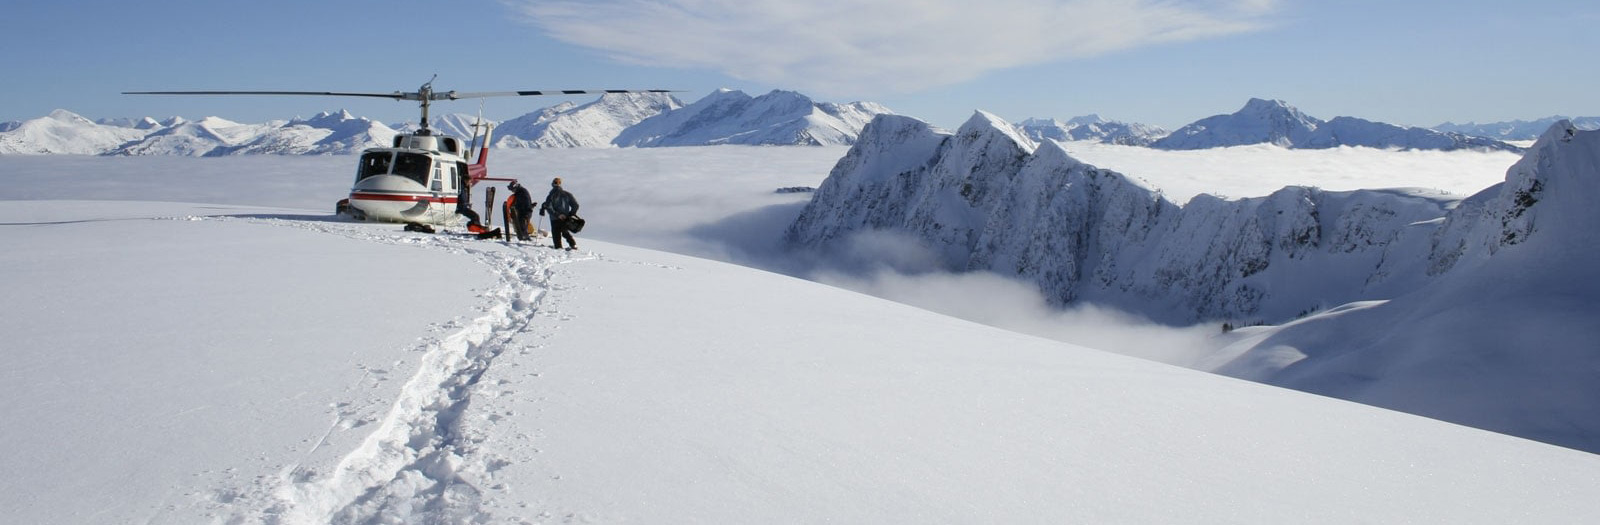 Chugach Powder Guides, Alaska Heli Skiing